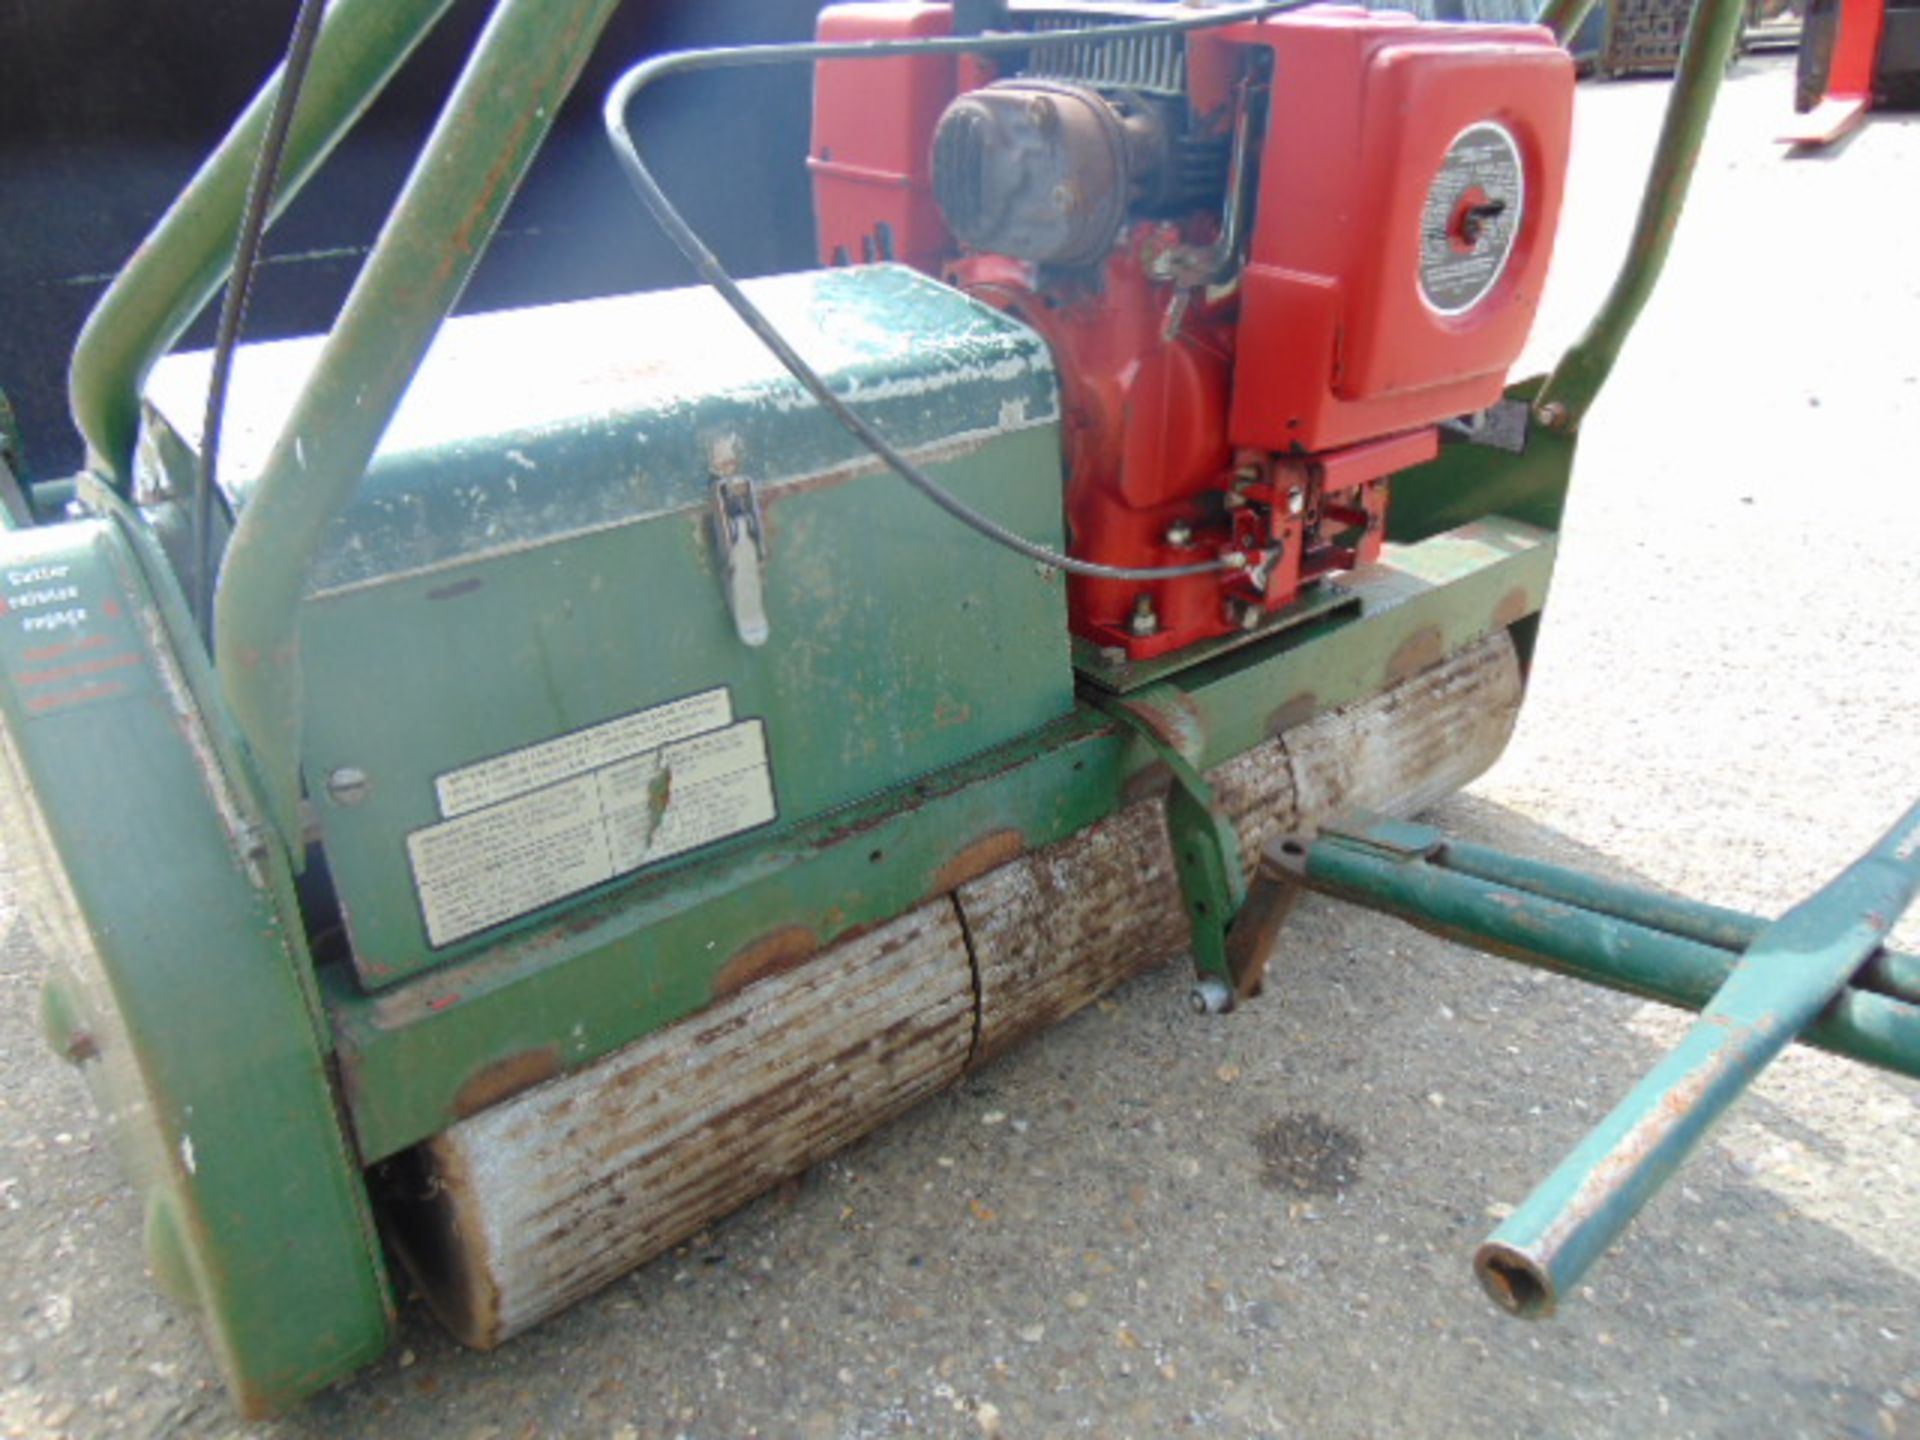 Atco 34" Groundsman B34 Lawn Mower with Magnum Kohler 8 engine - Image 11 of 14